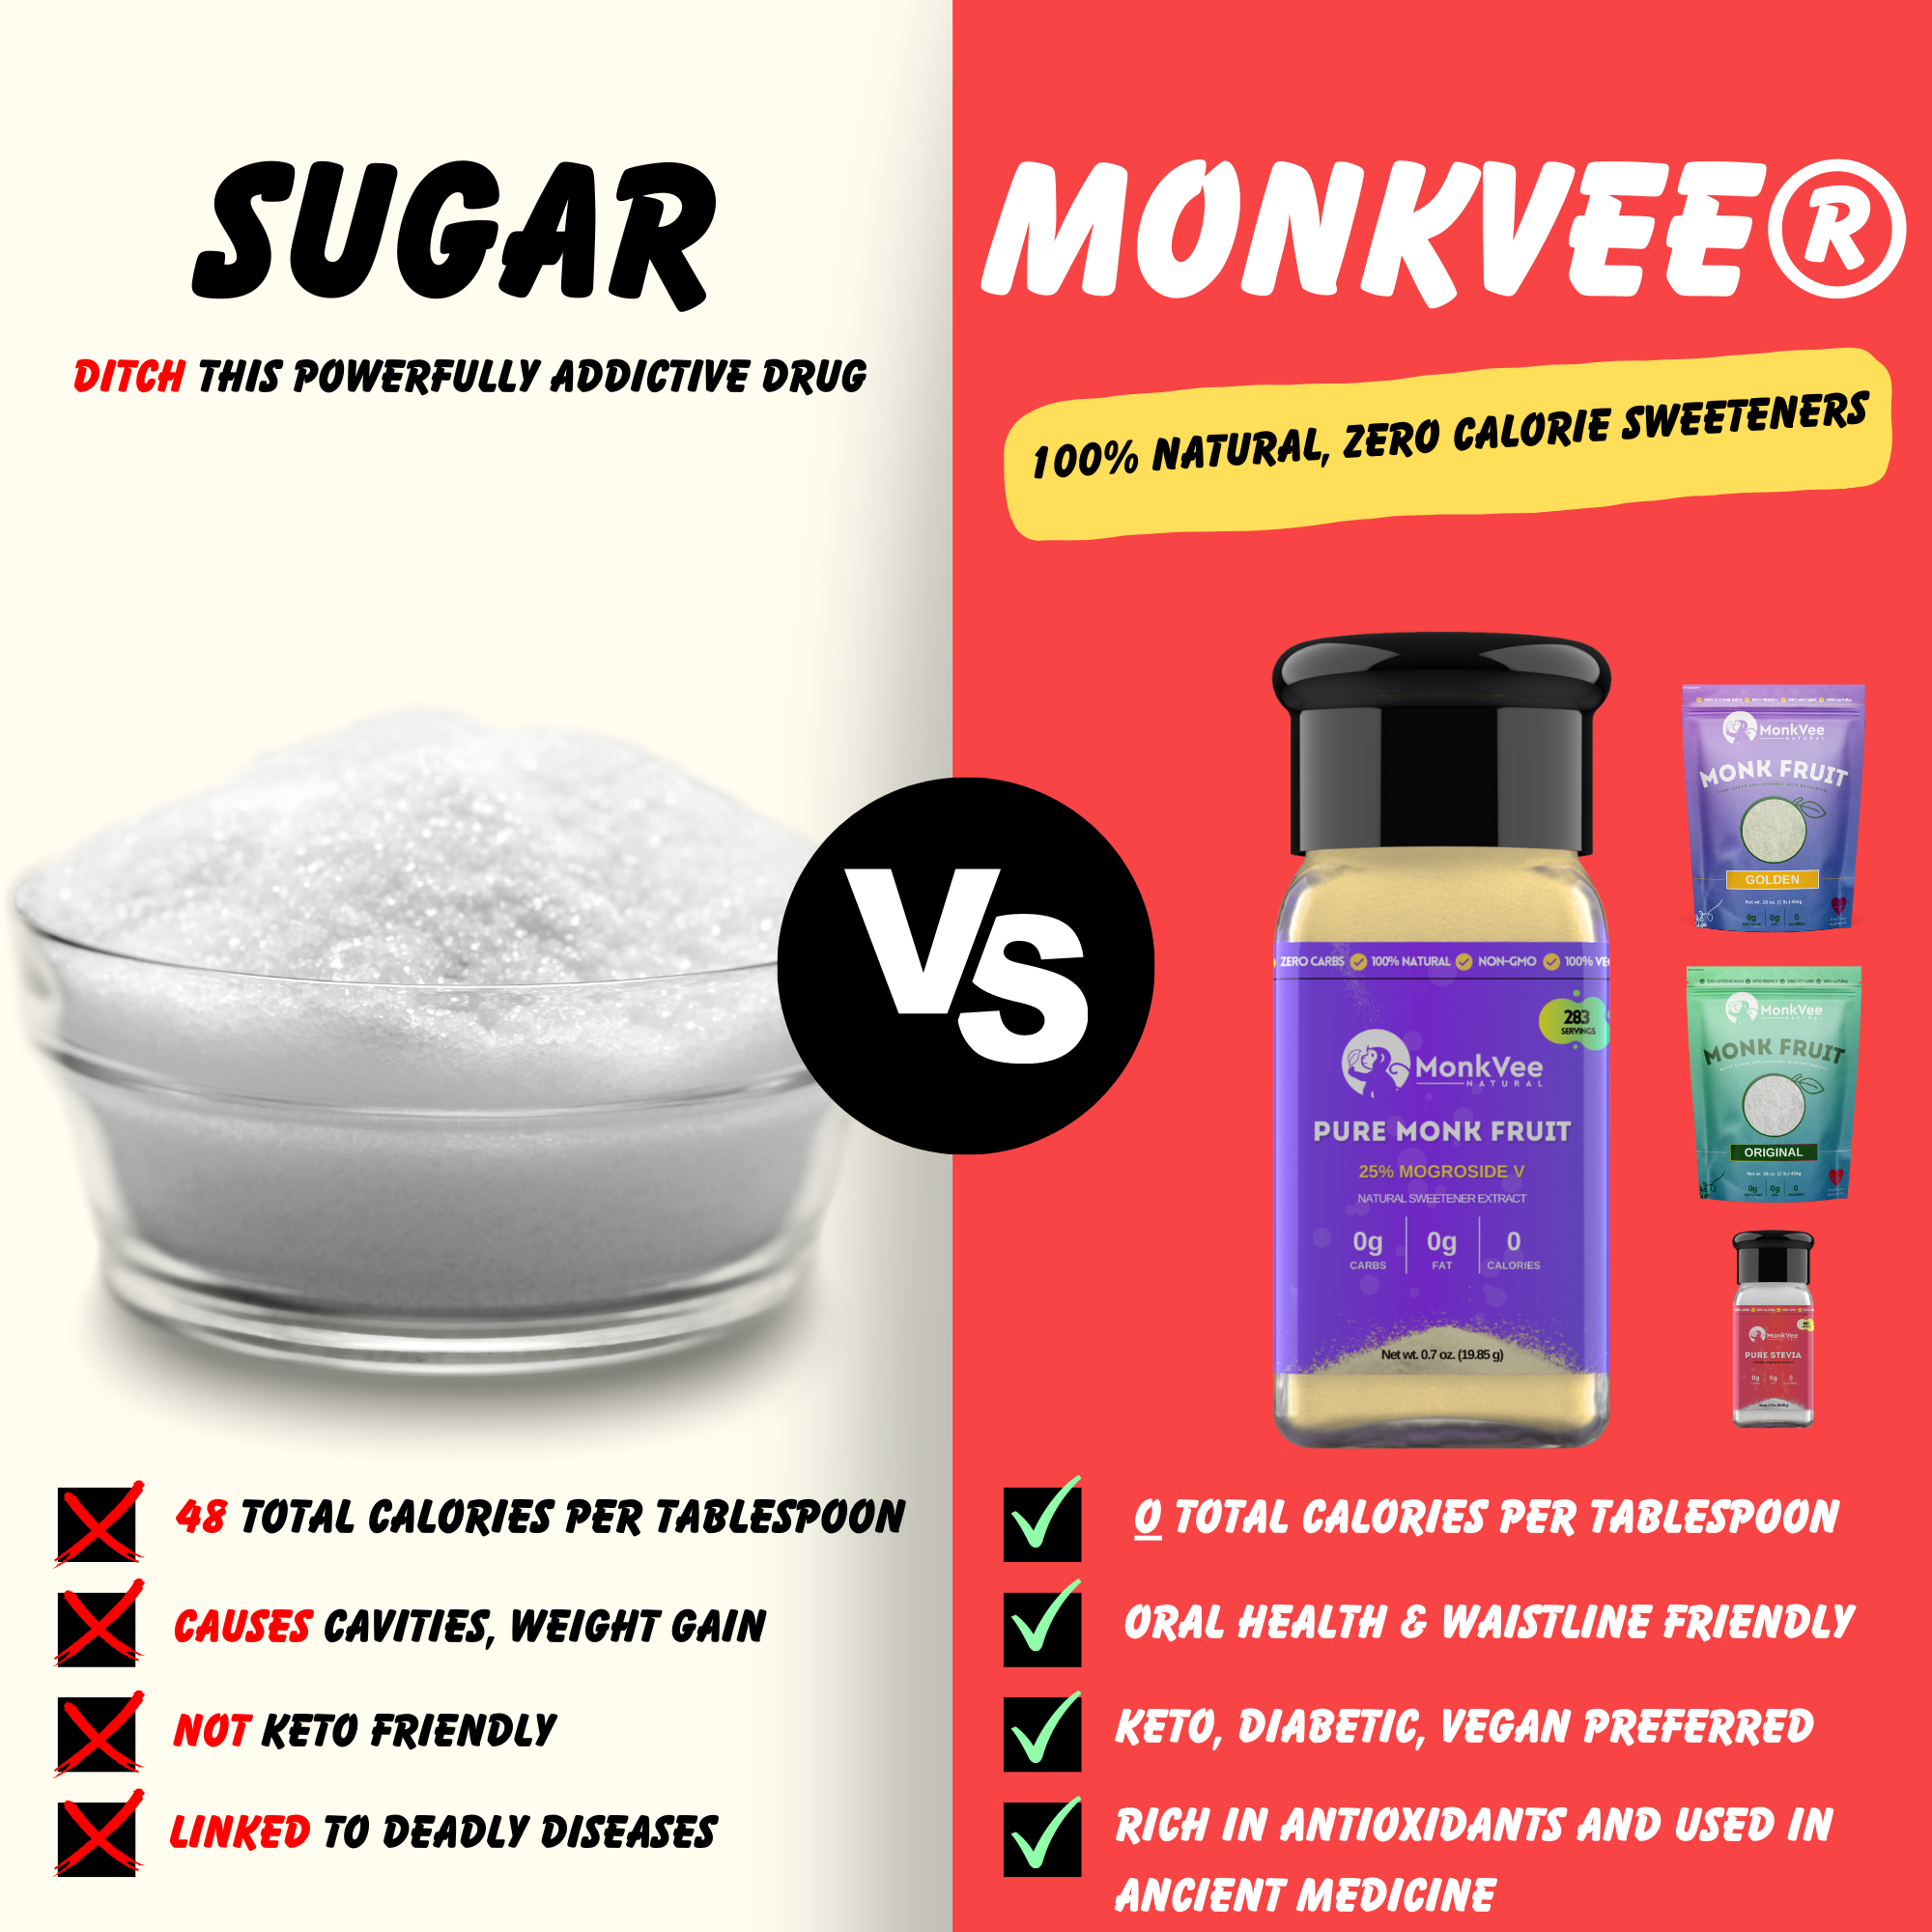 sugar vs monkvee - sugarfree 100% natural, zero calorie sweetener